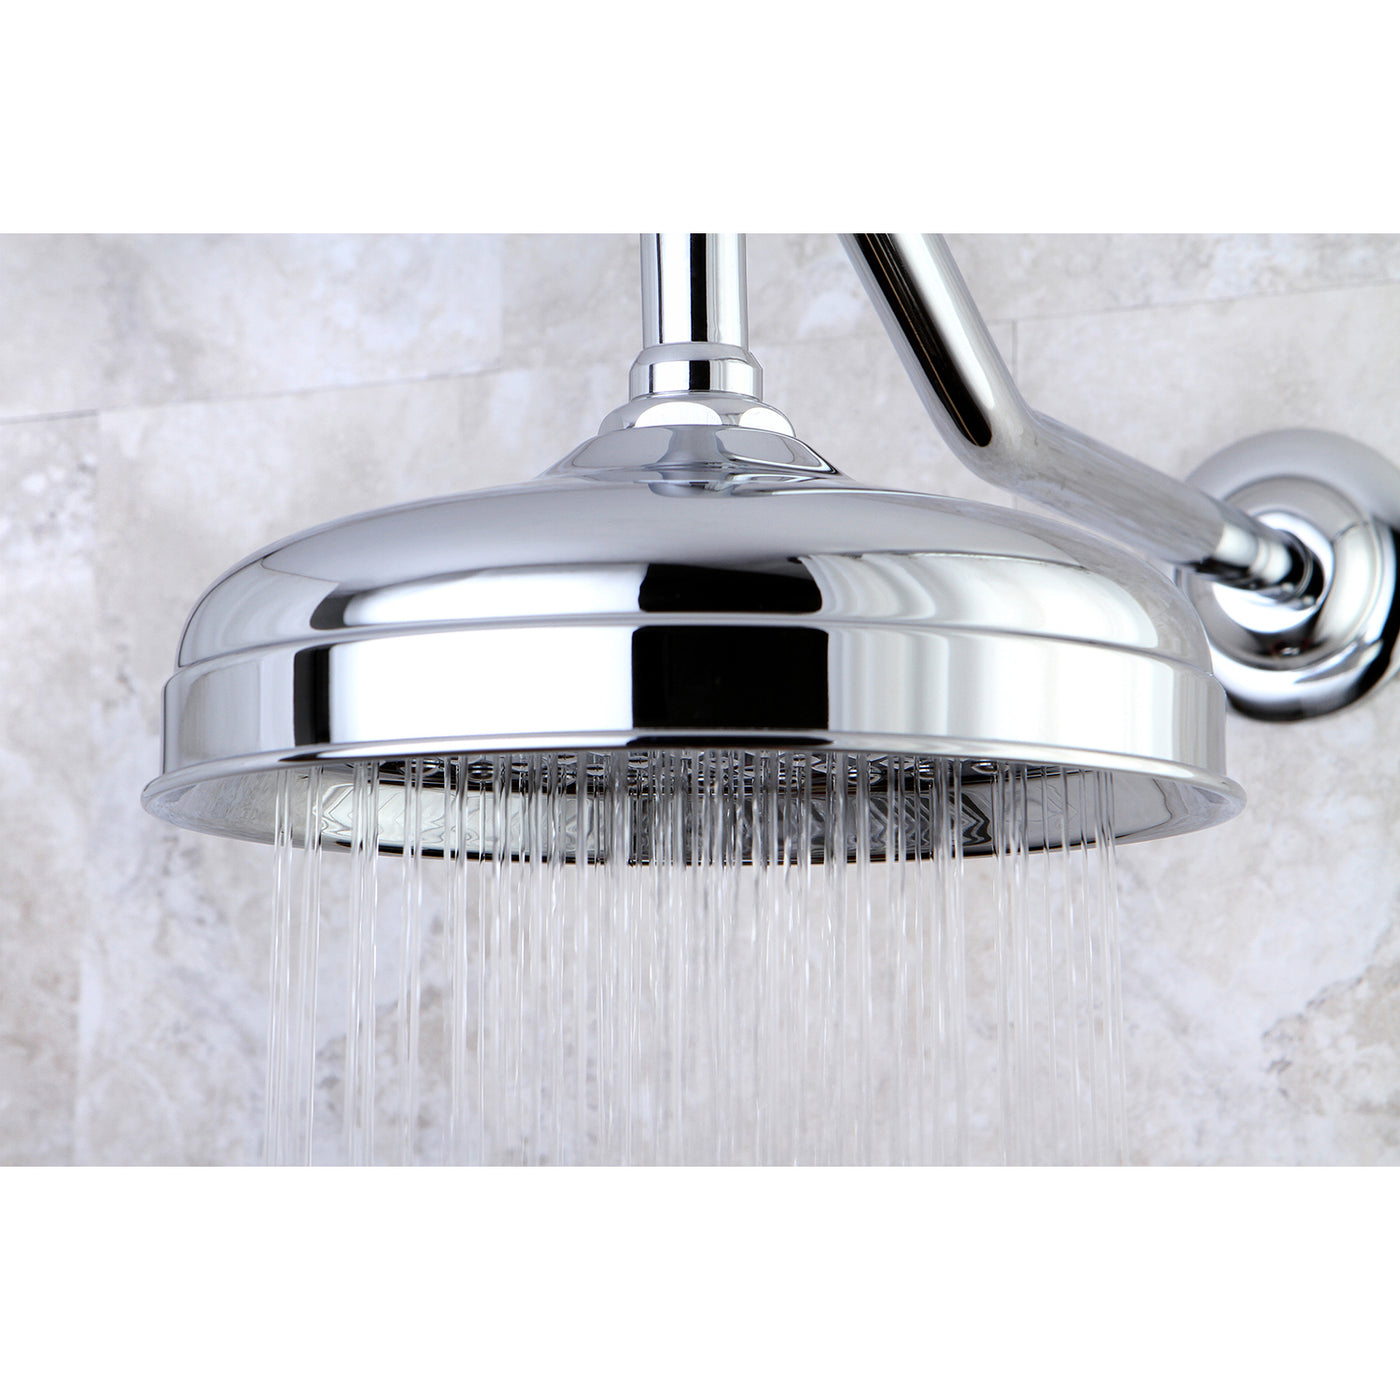 Elements of Design DK1241 8-Inch Raindrop Shower Head, Polished Chrome